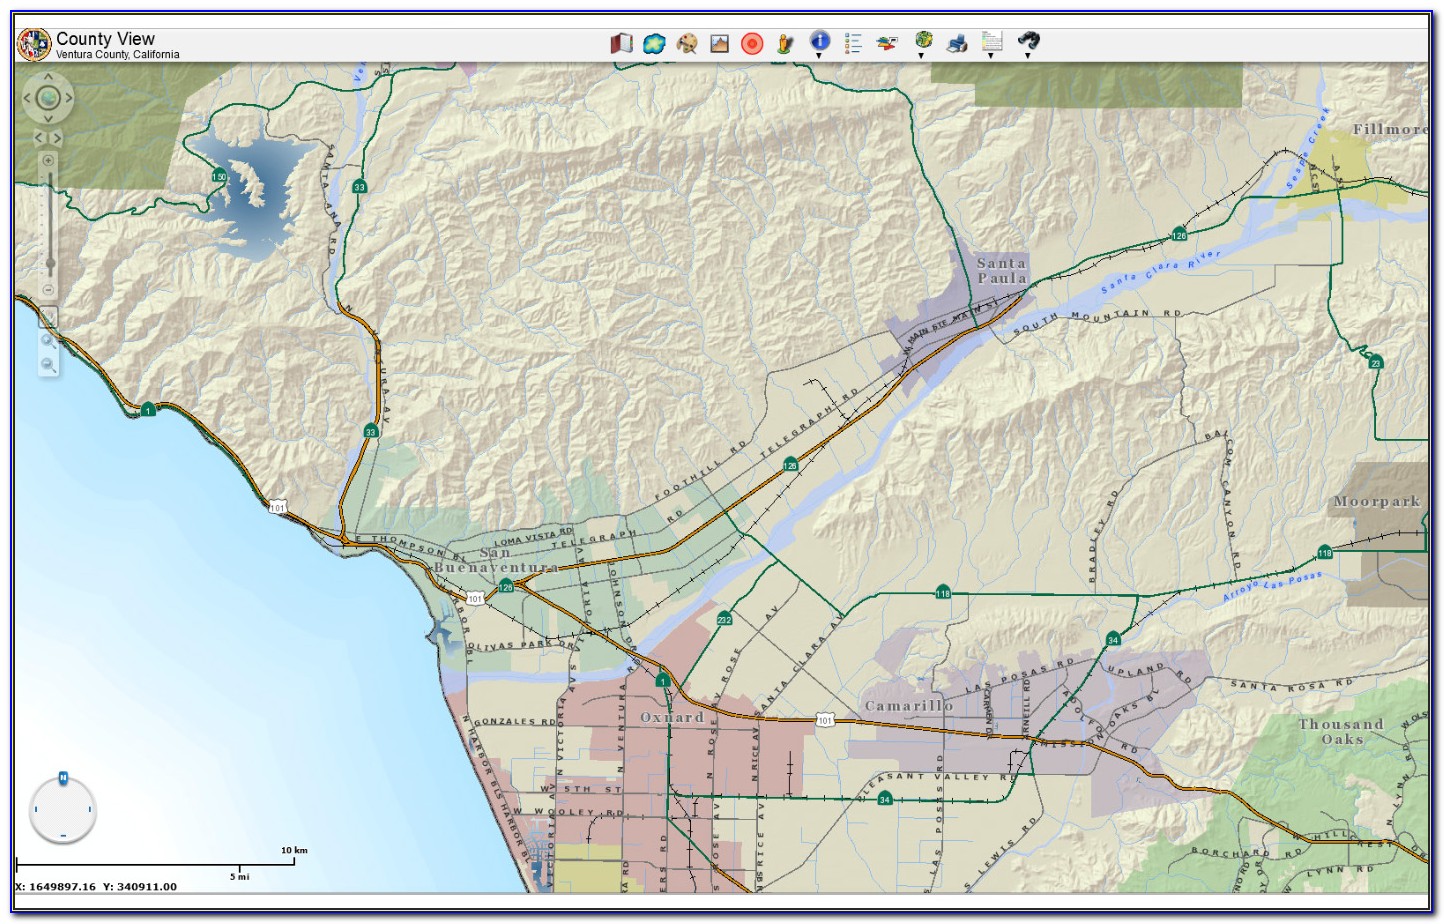 Ventura County Assessor Map